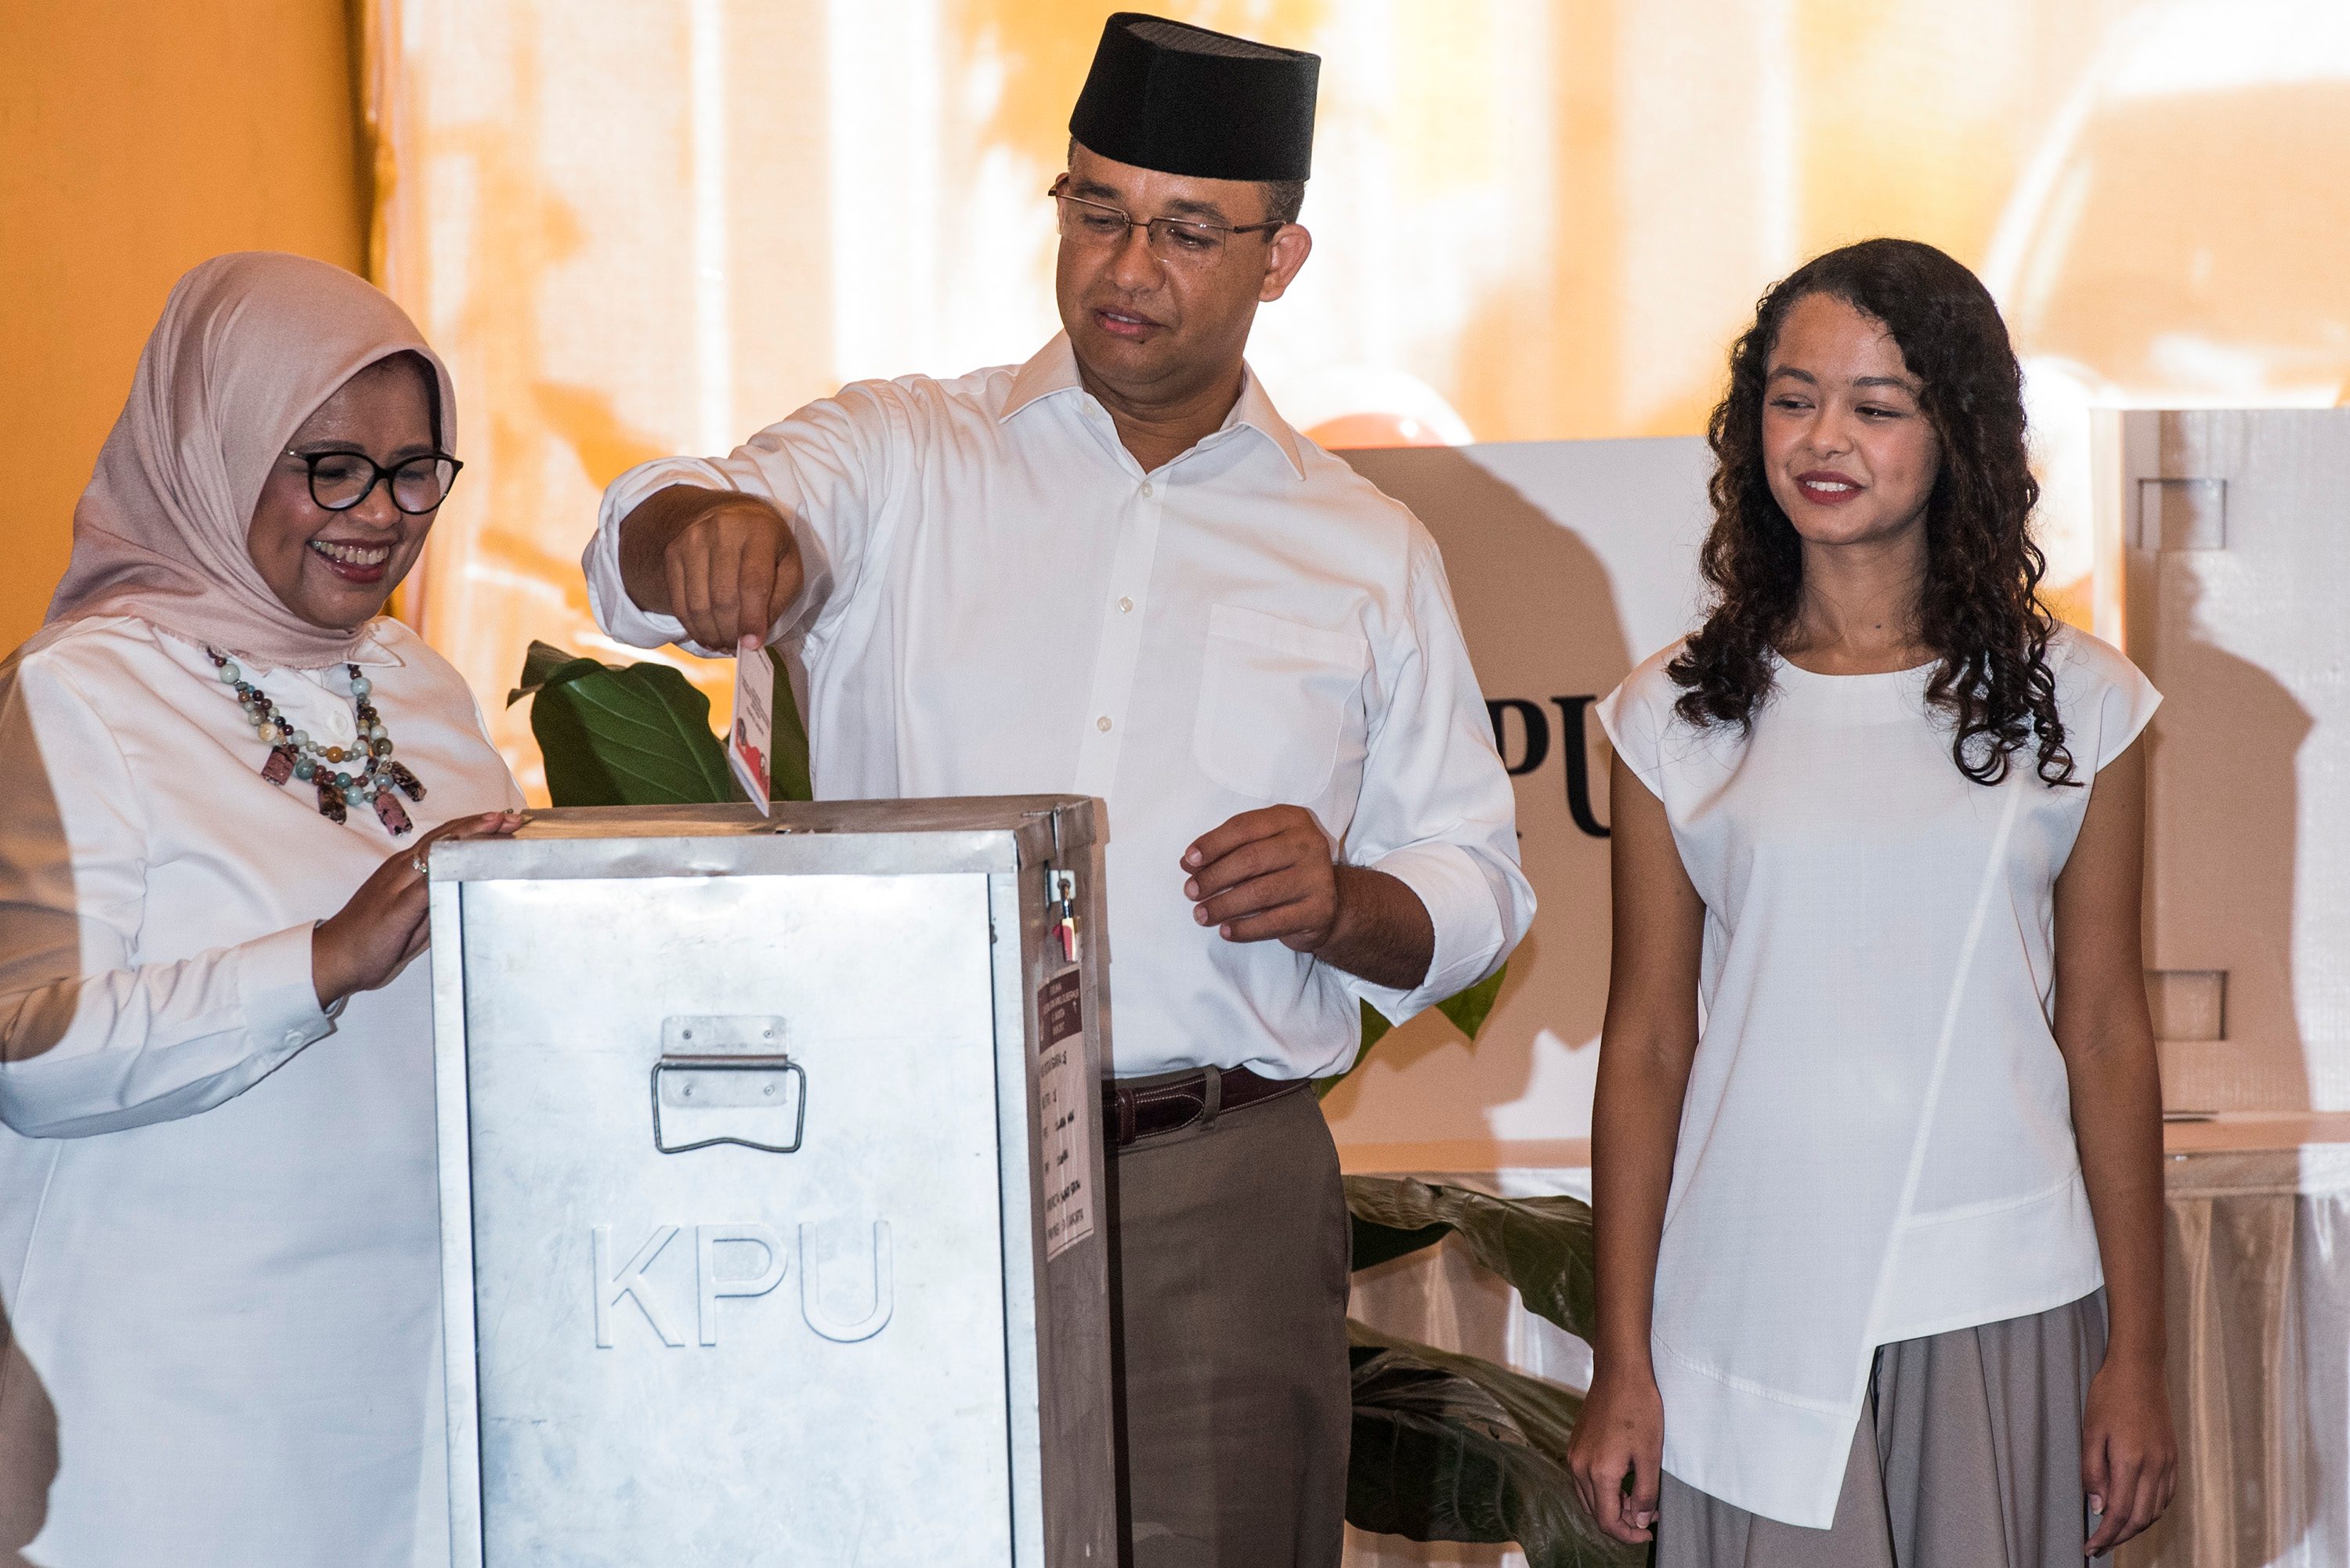 Cawagub nomor urut 2, Djarot Saiful Hidayat (kiri) bersama istri, Happy Farida (kanan), memasukkan surat suara saat menggunakan hak pilih di TPS 8, Kuningan, Jakarta, pada 15 Februari 2017. Foto oleh Rivan Awal Lingga/Antara

Cagub nomor urut tiga, Anies Baswedan (tengah), istri Fery Farhati Ganis (kiri) dan anak Mutiara Annisa Baswedan (kanan), memasukkan surat suara saat memberikan hak pilih pada pencoblosan Pemilihan Gubernur di TPS 28 Cilandak Barat, Jakarta, pada 15 Februari 2017. Foto oleh M Agung Rajasa/Antara 